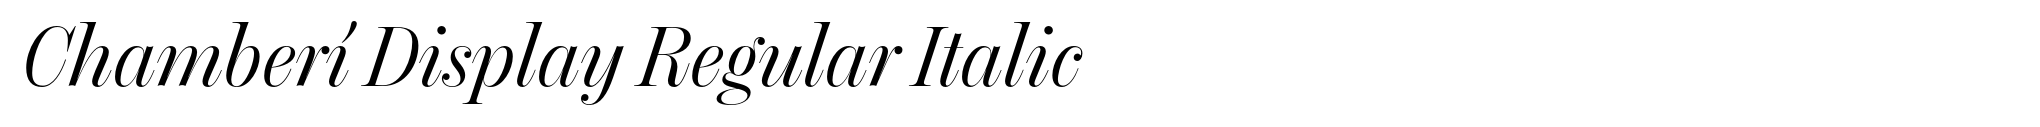 Chamberí Display Regular Italic image